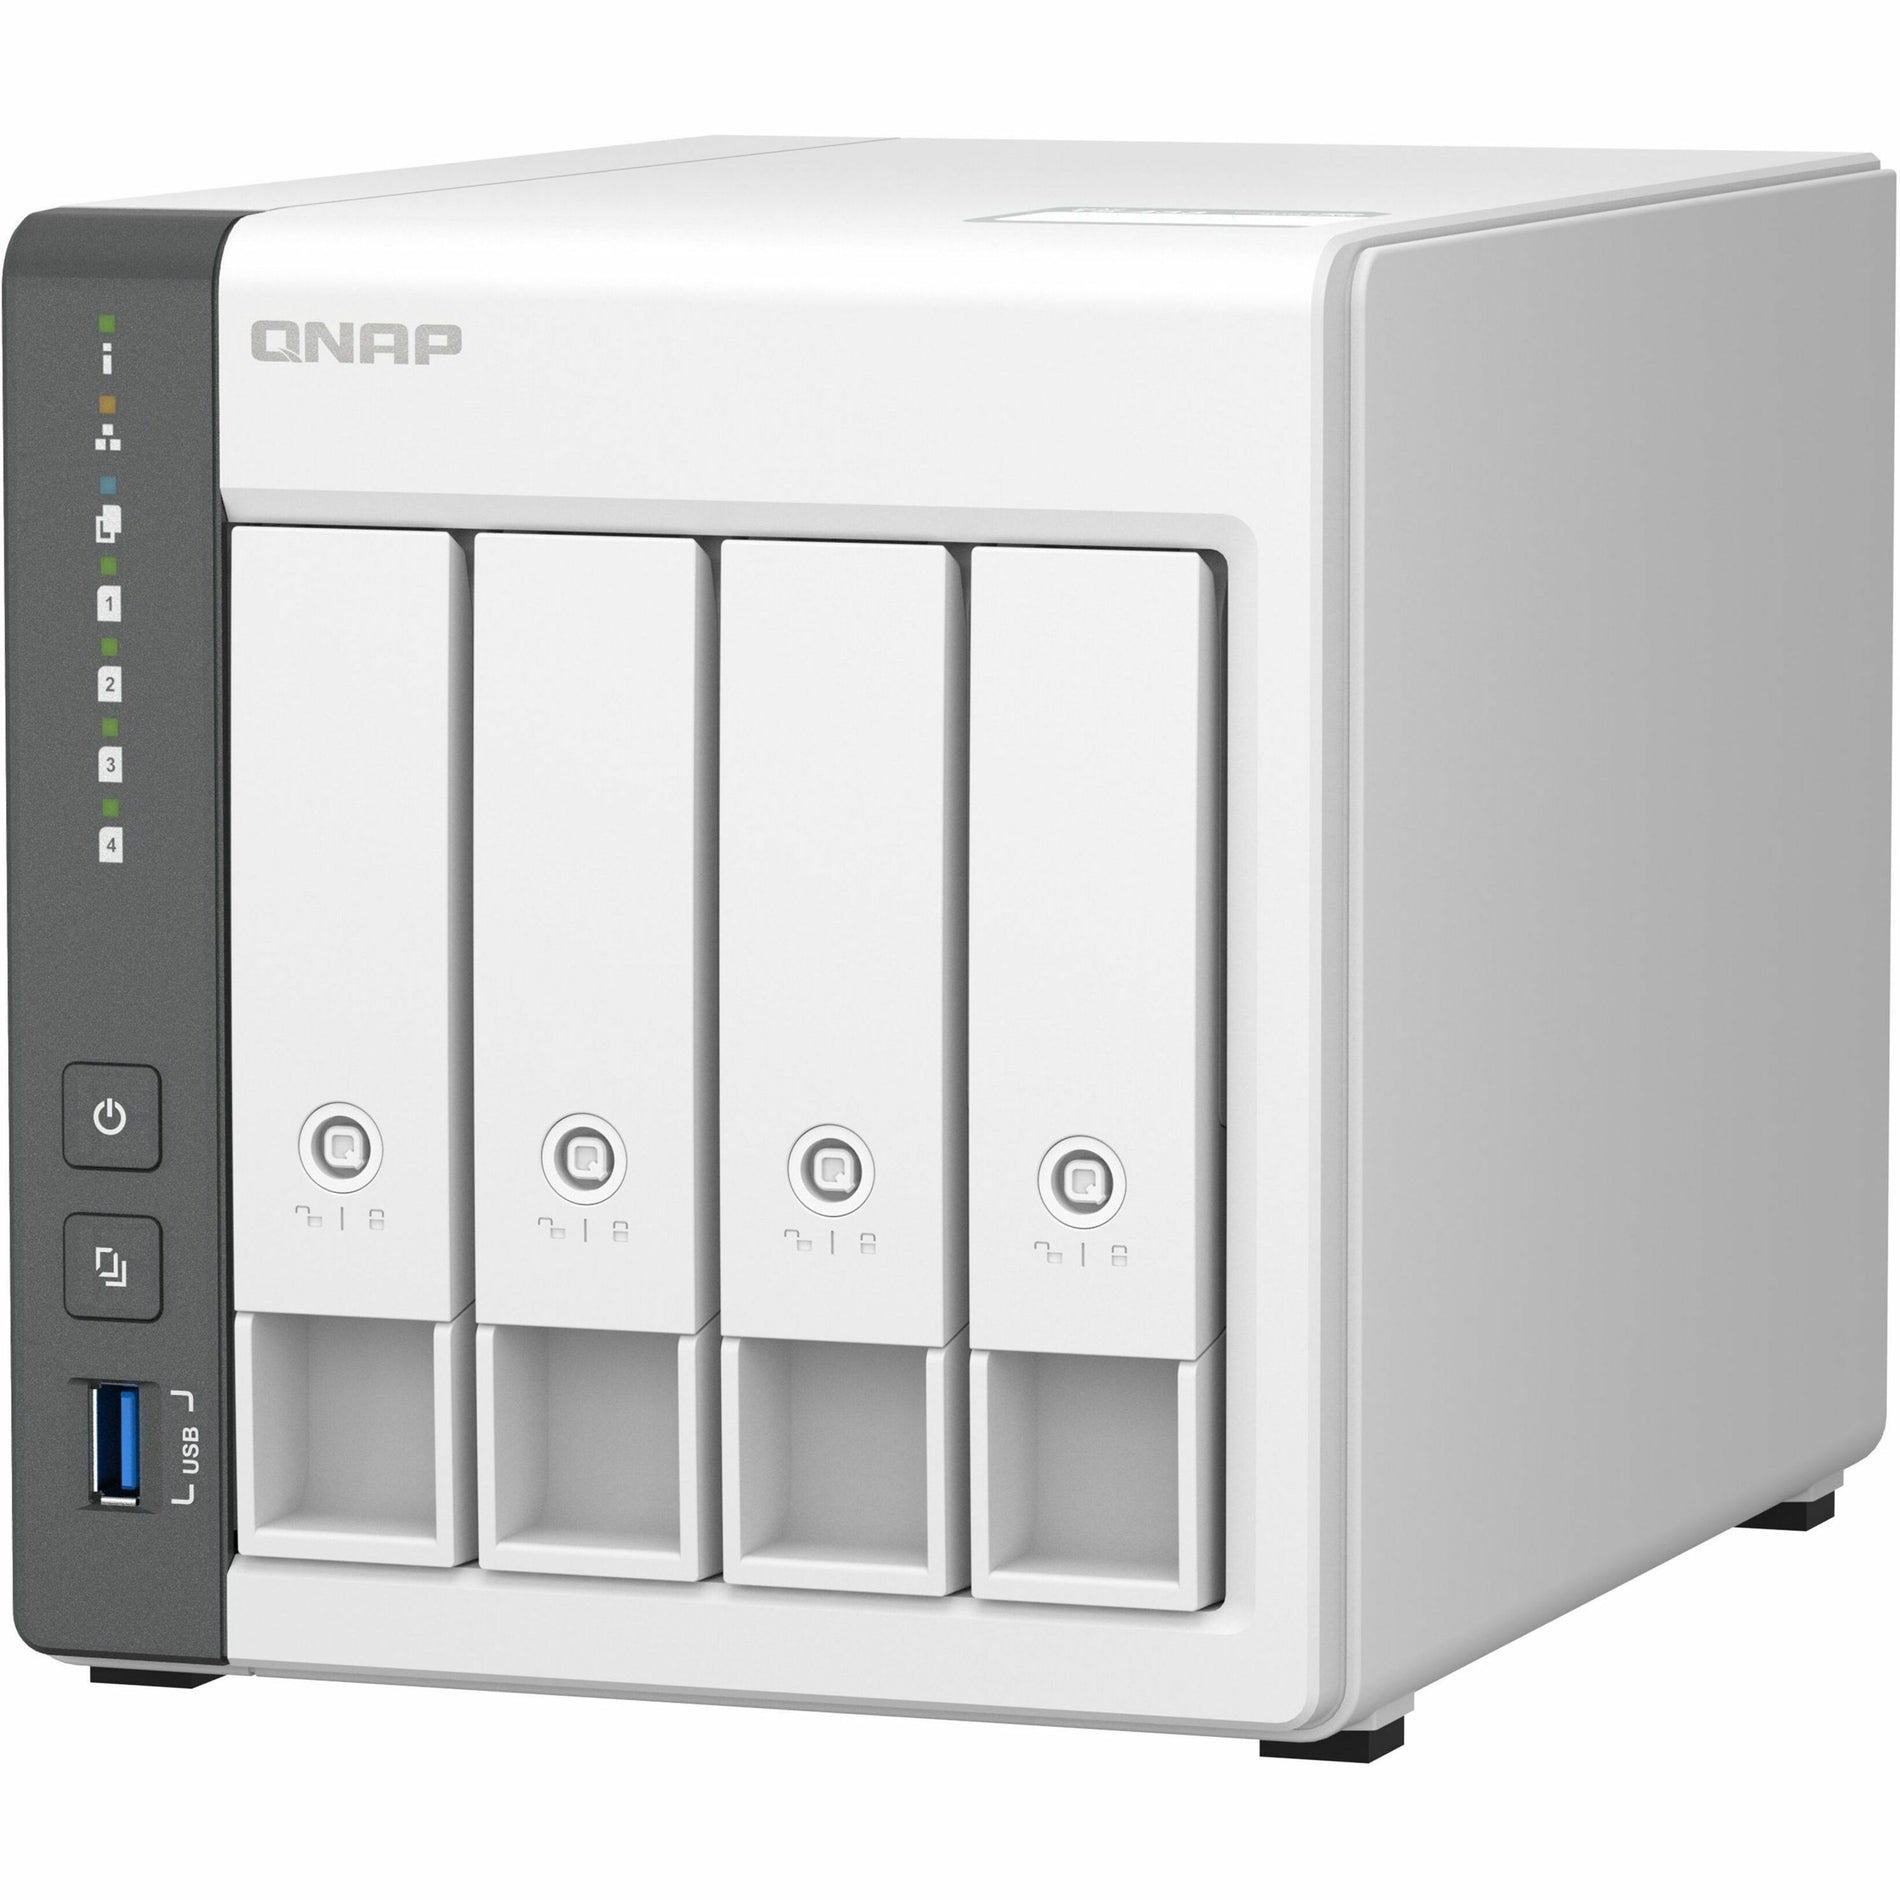 QNAP TS-433-4G TS-433-4G-US TS-433-4G SAN/NAS Storage System, Quad-core Processor, Gigabit Ethernet